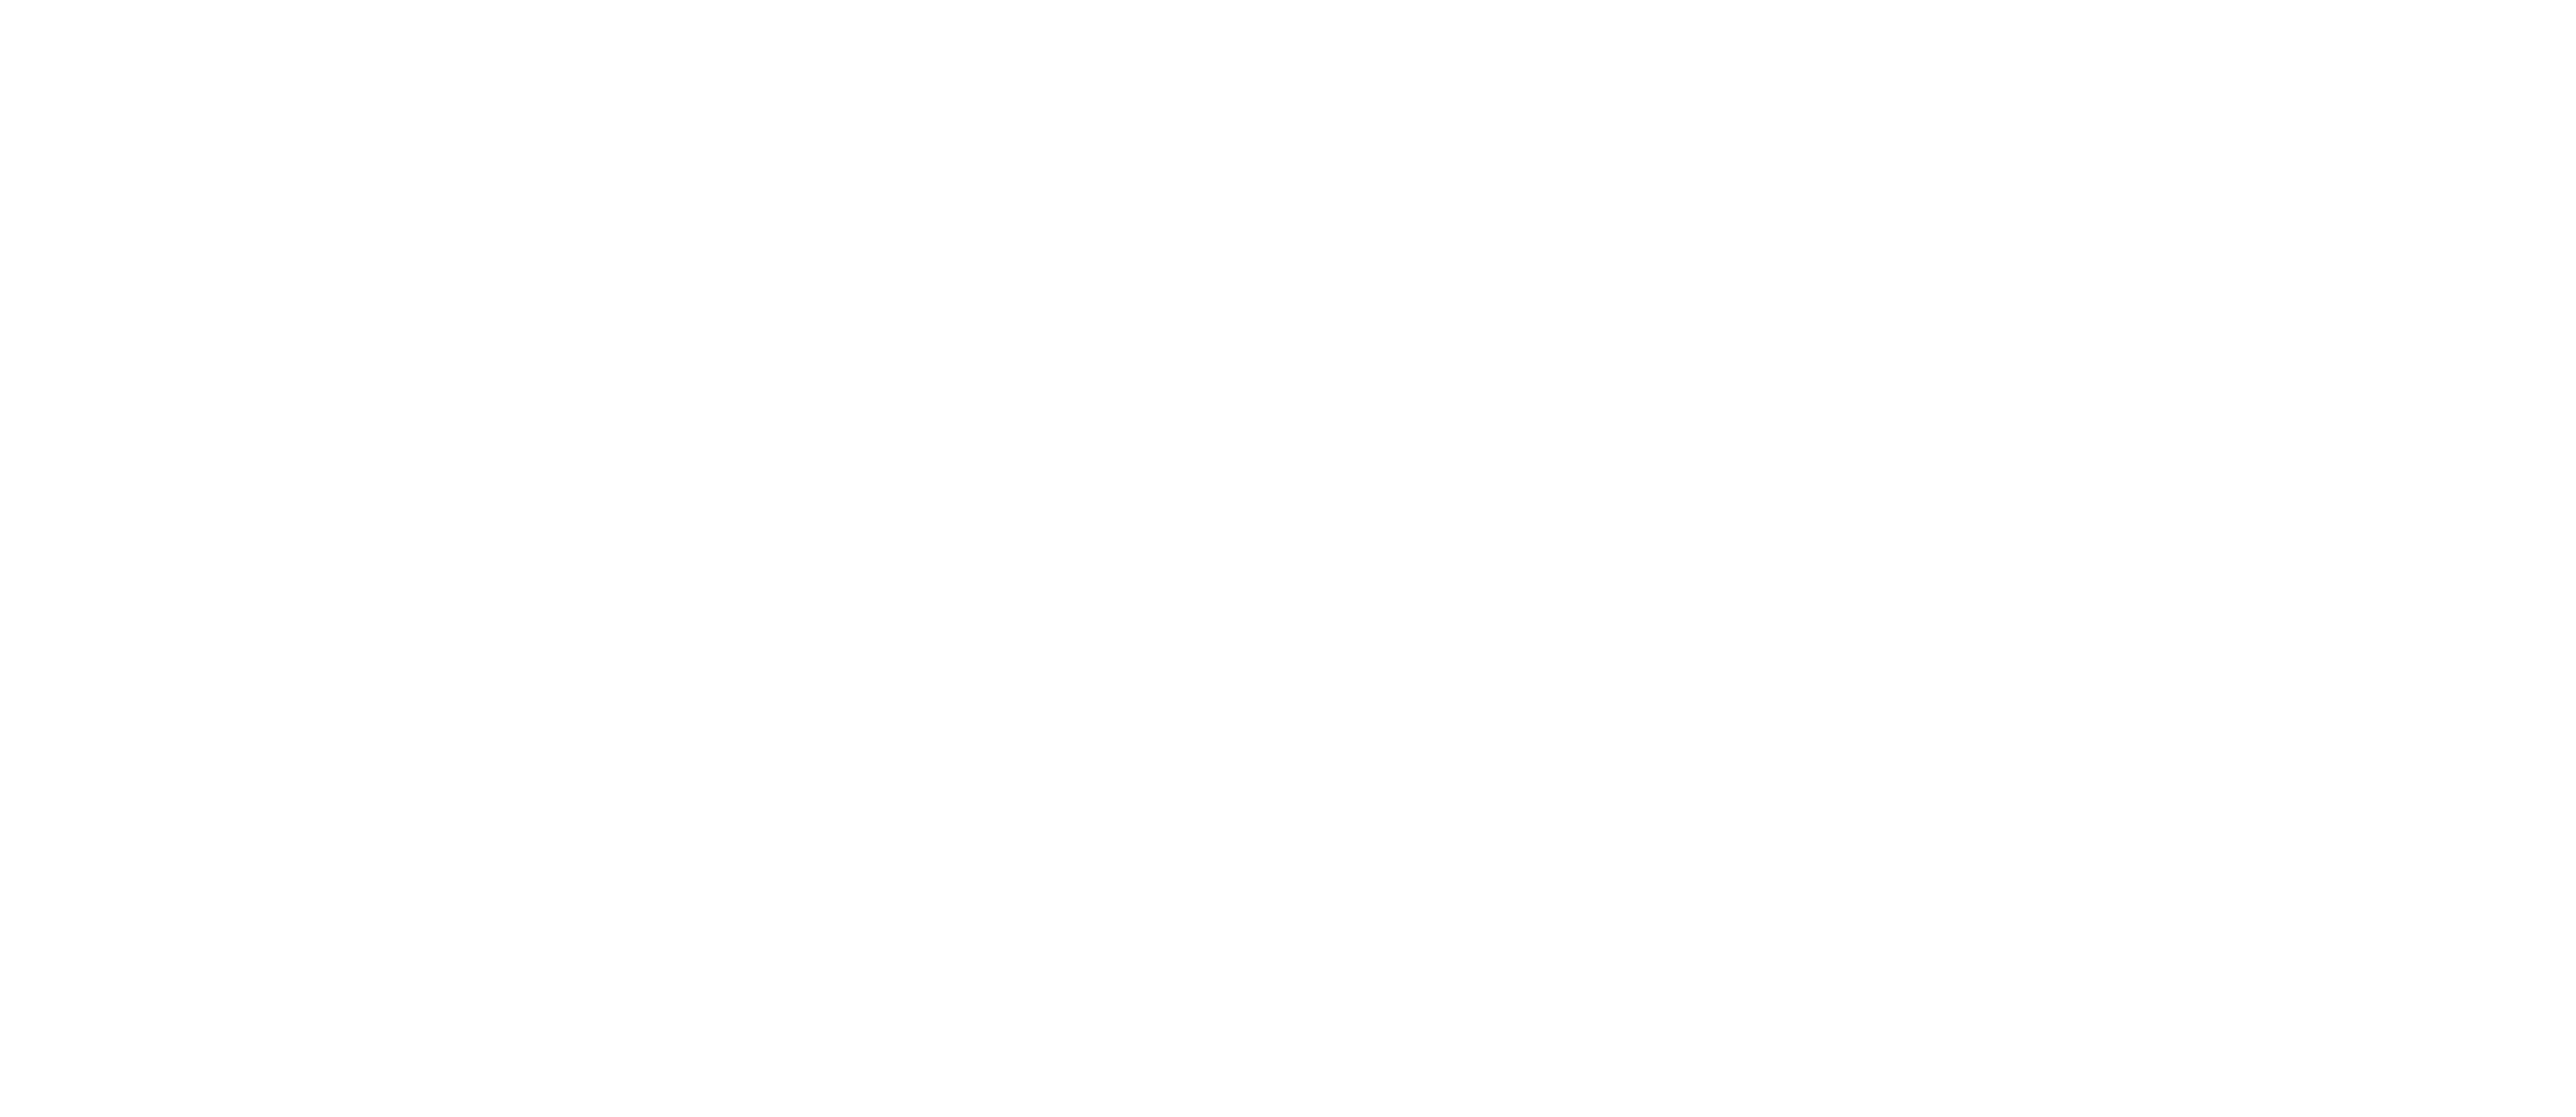 IBCM Network